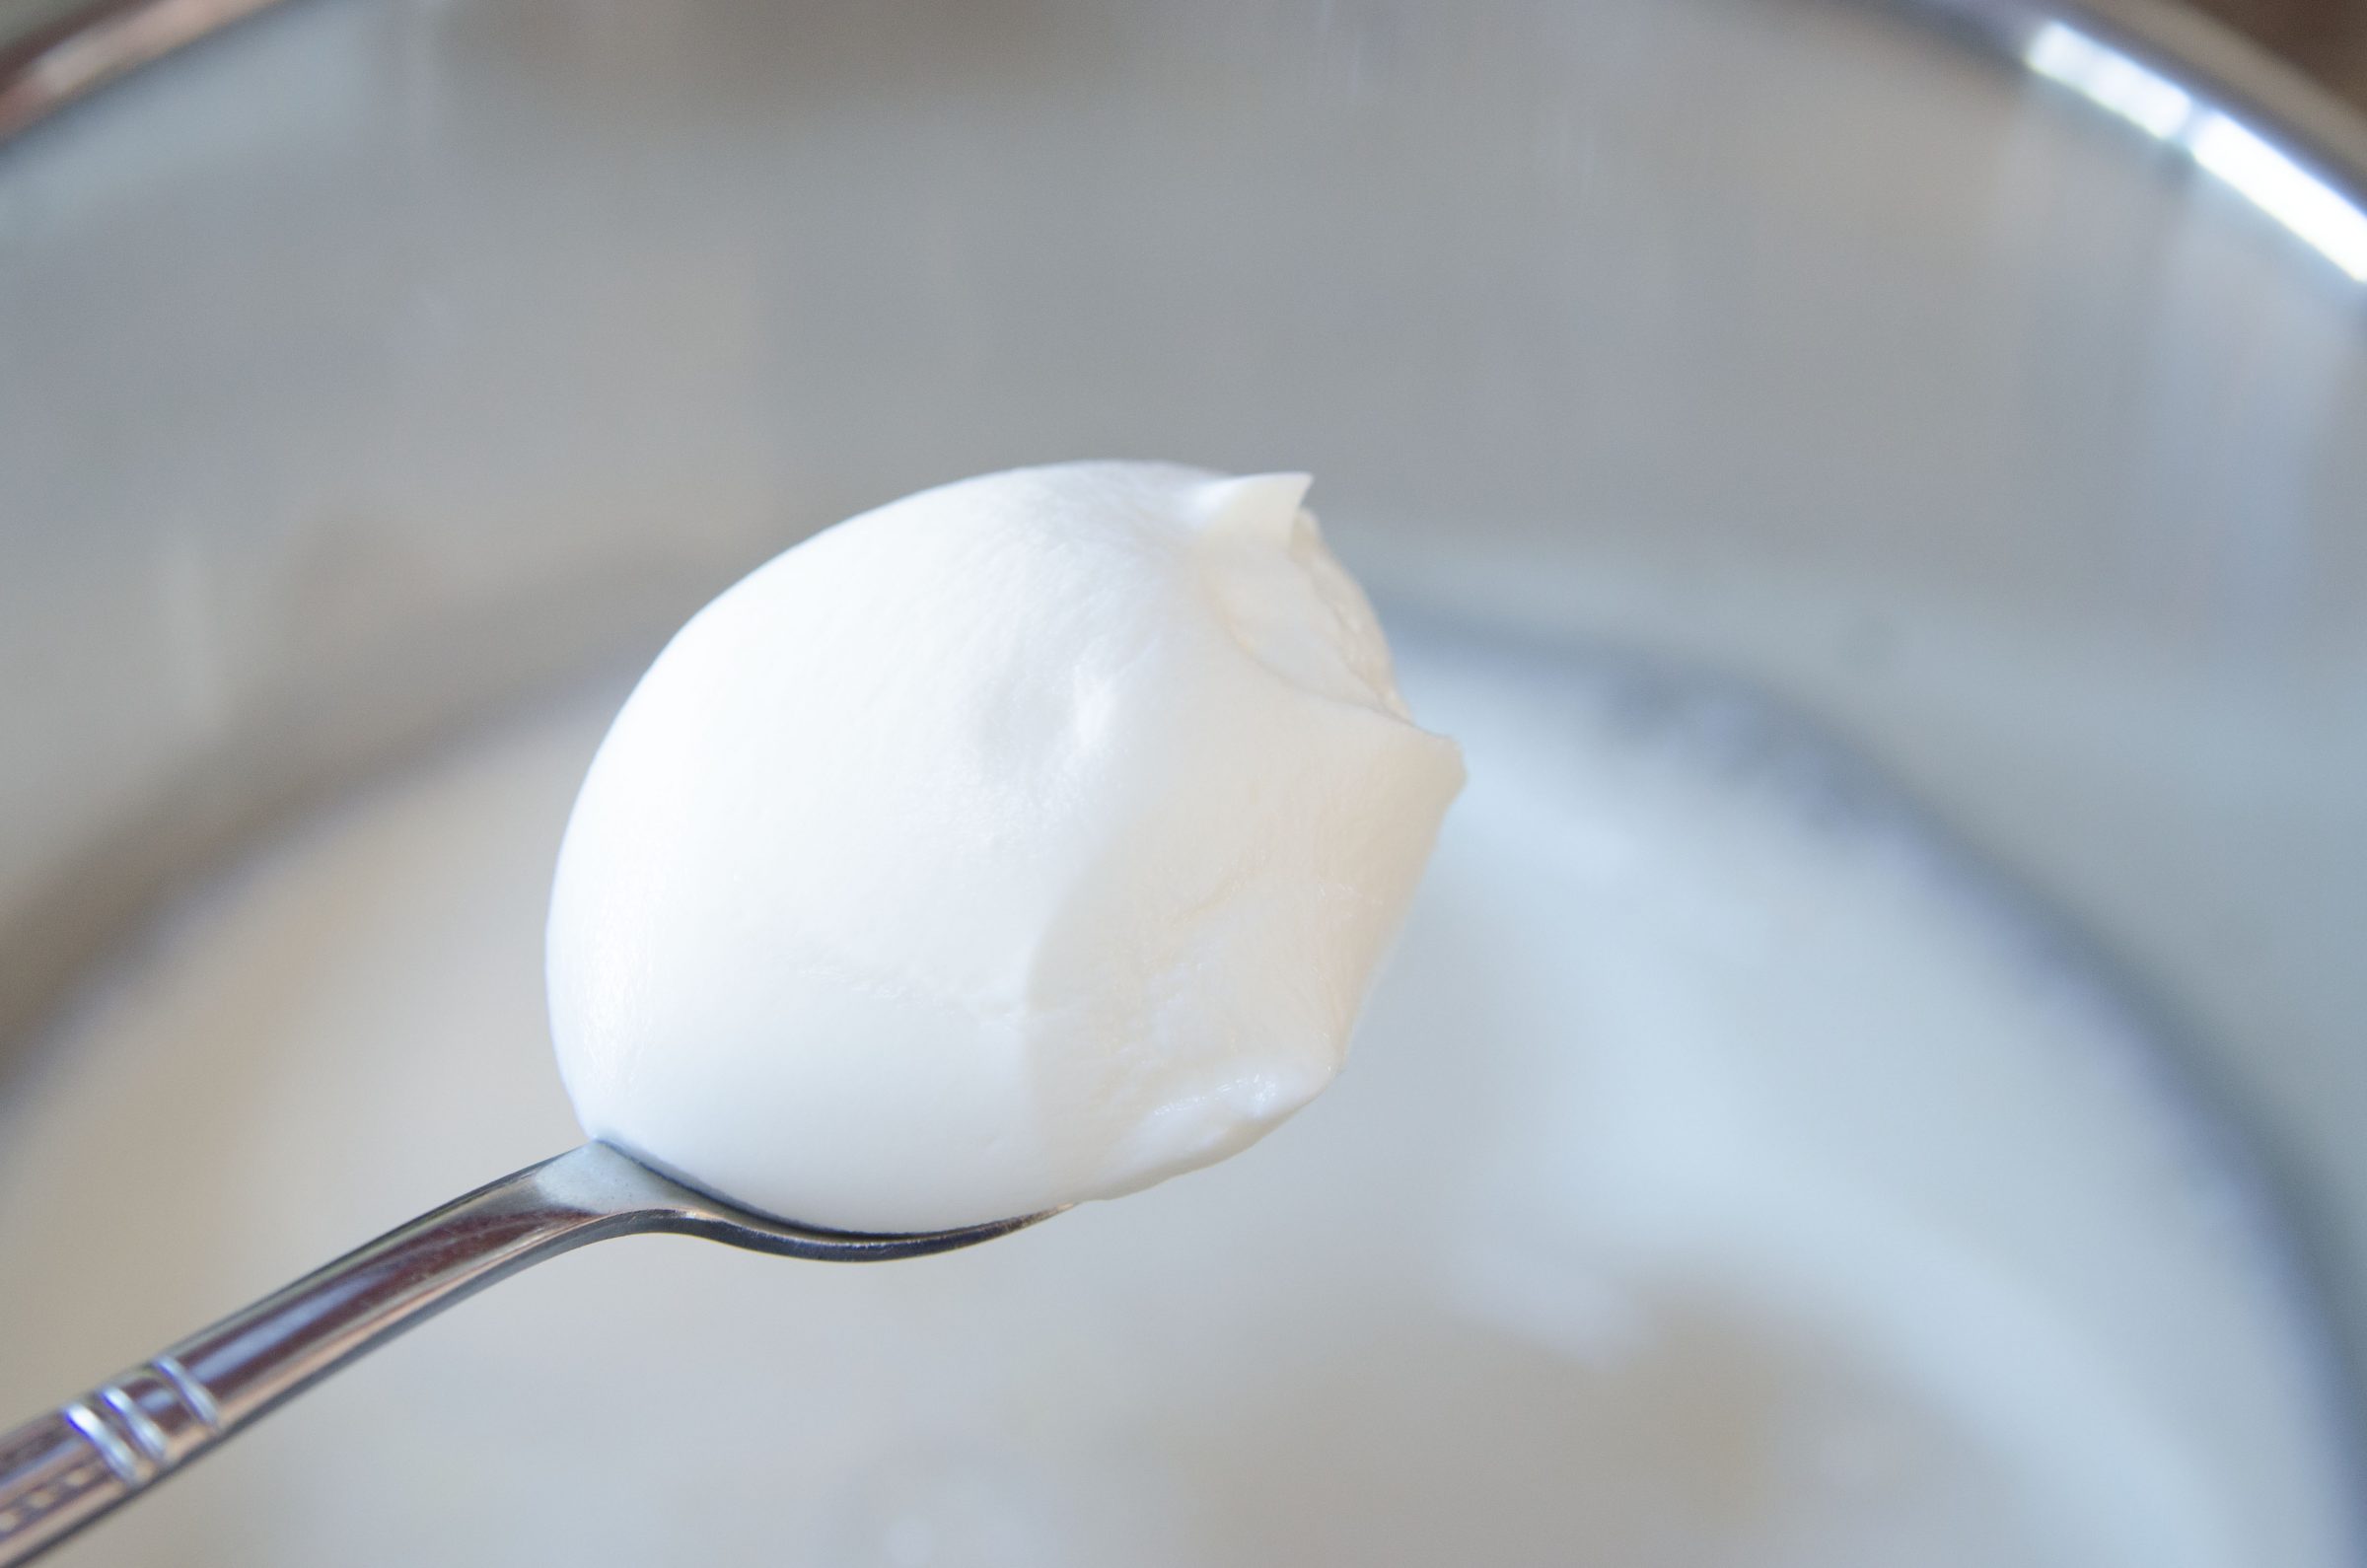 Instant Pot yogurt recipe | FoodieFather.net